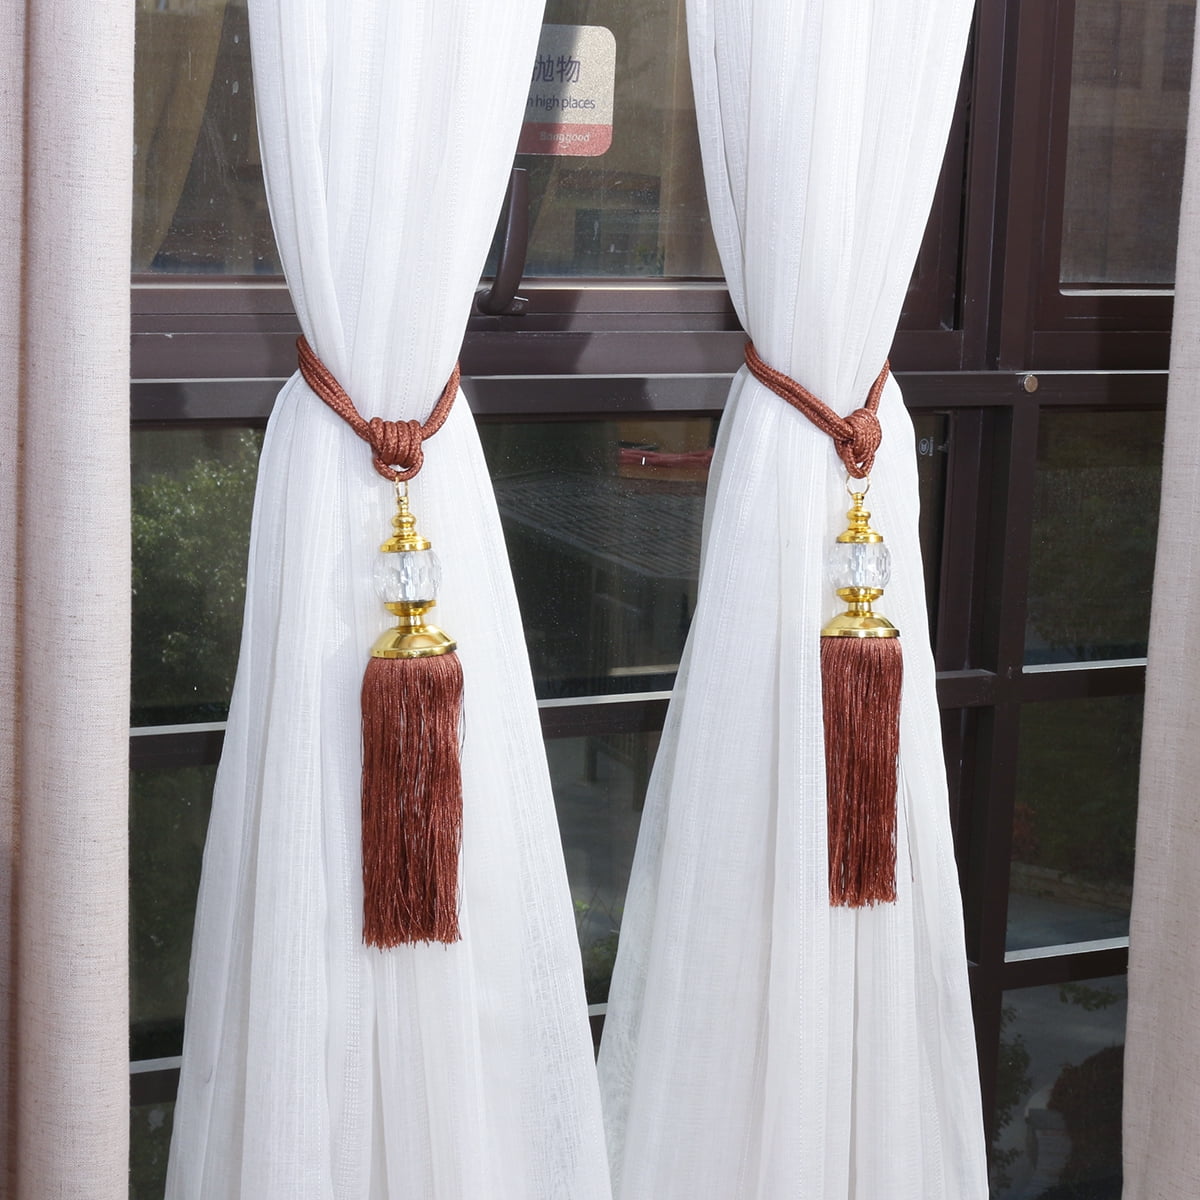 1Pair Curtain Tie Backs Braided Curtains Rope Window Decor Curtain Accessories